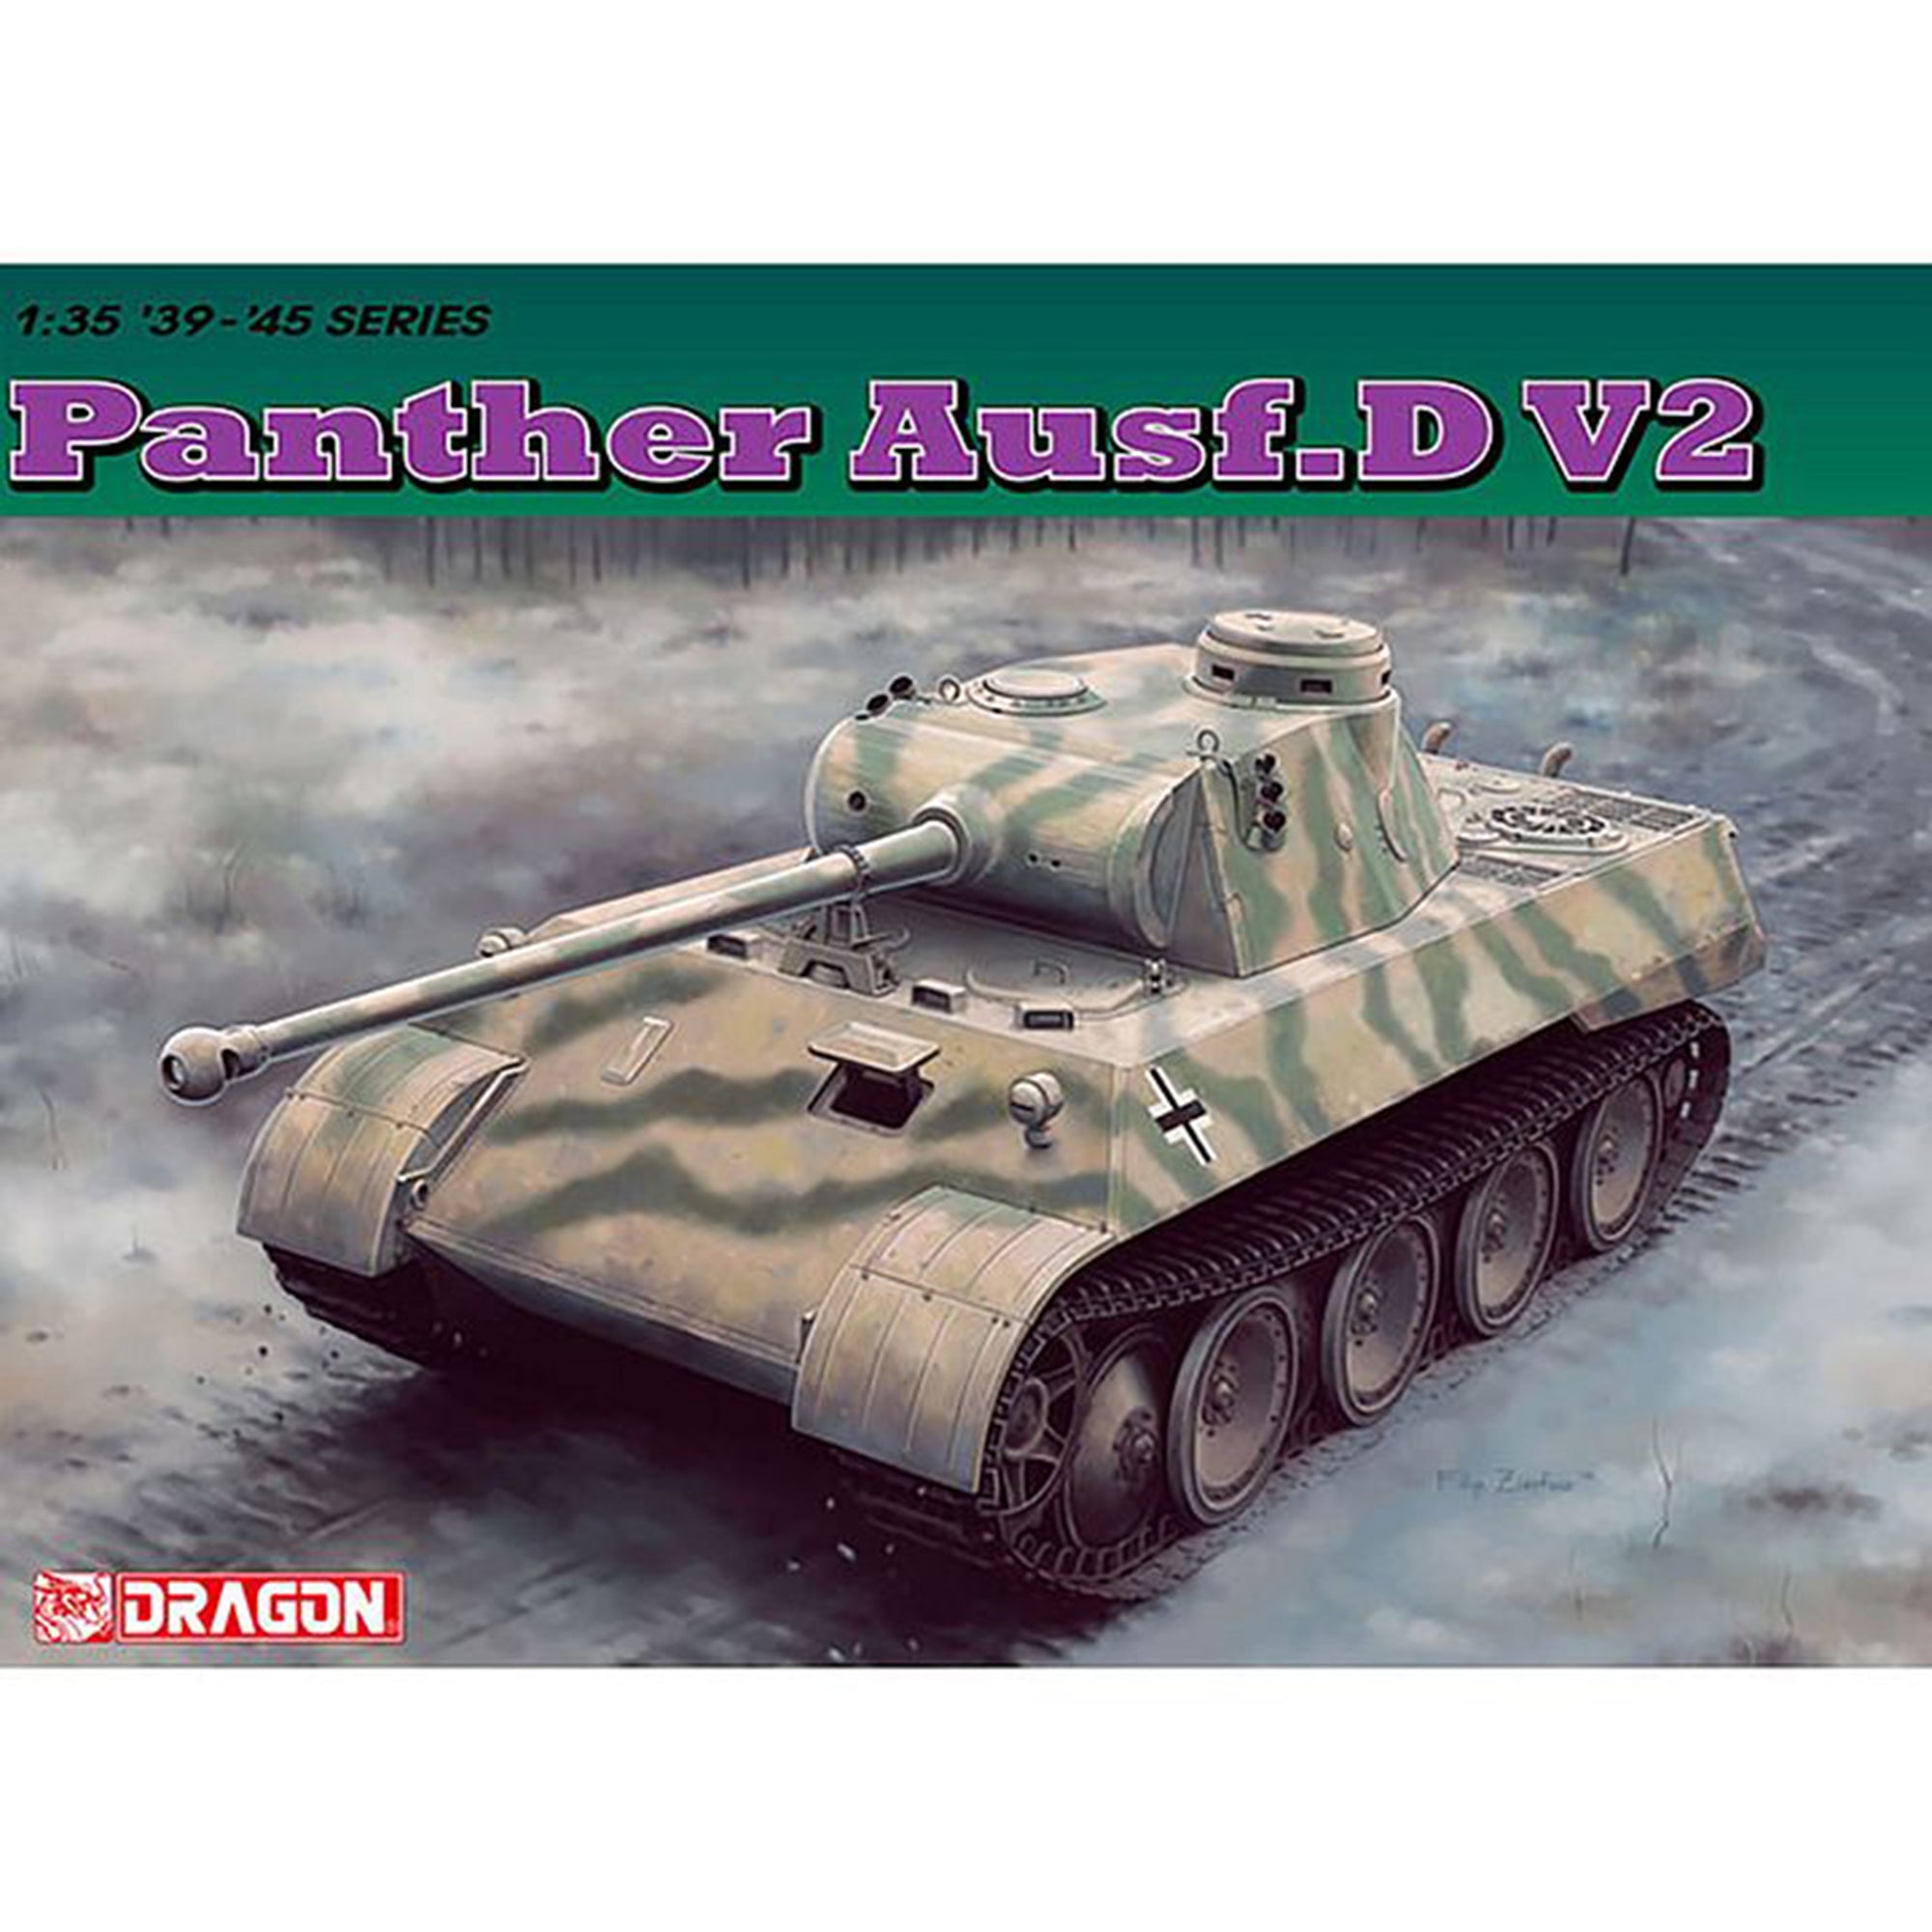 Dragon 6822 1/35 Panther Ausf.D V2 Model Kit